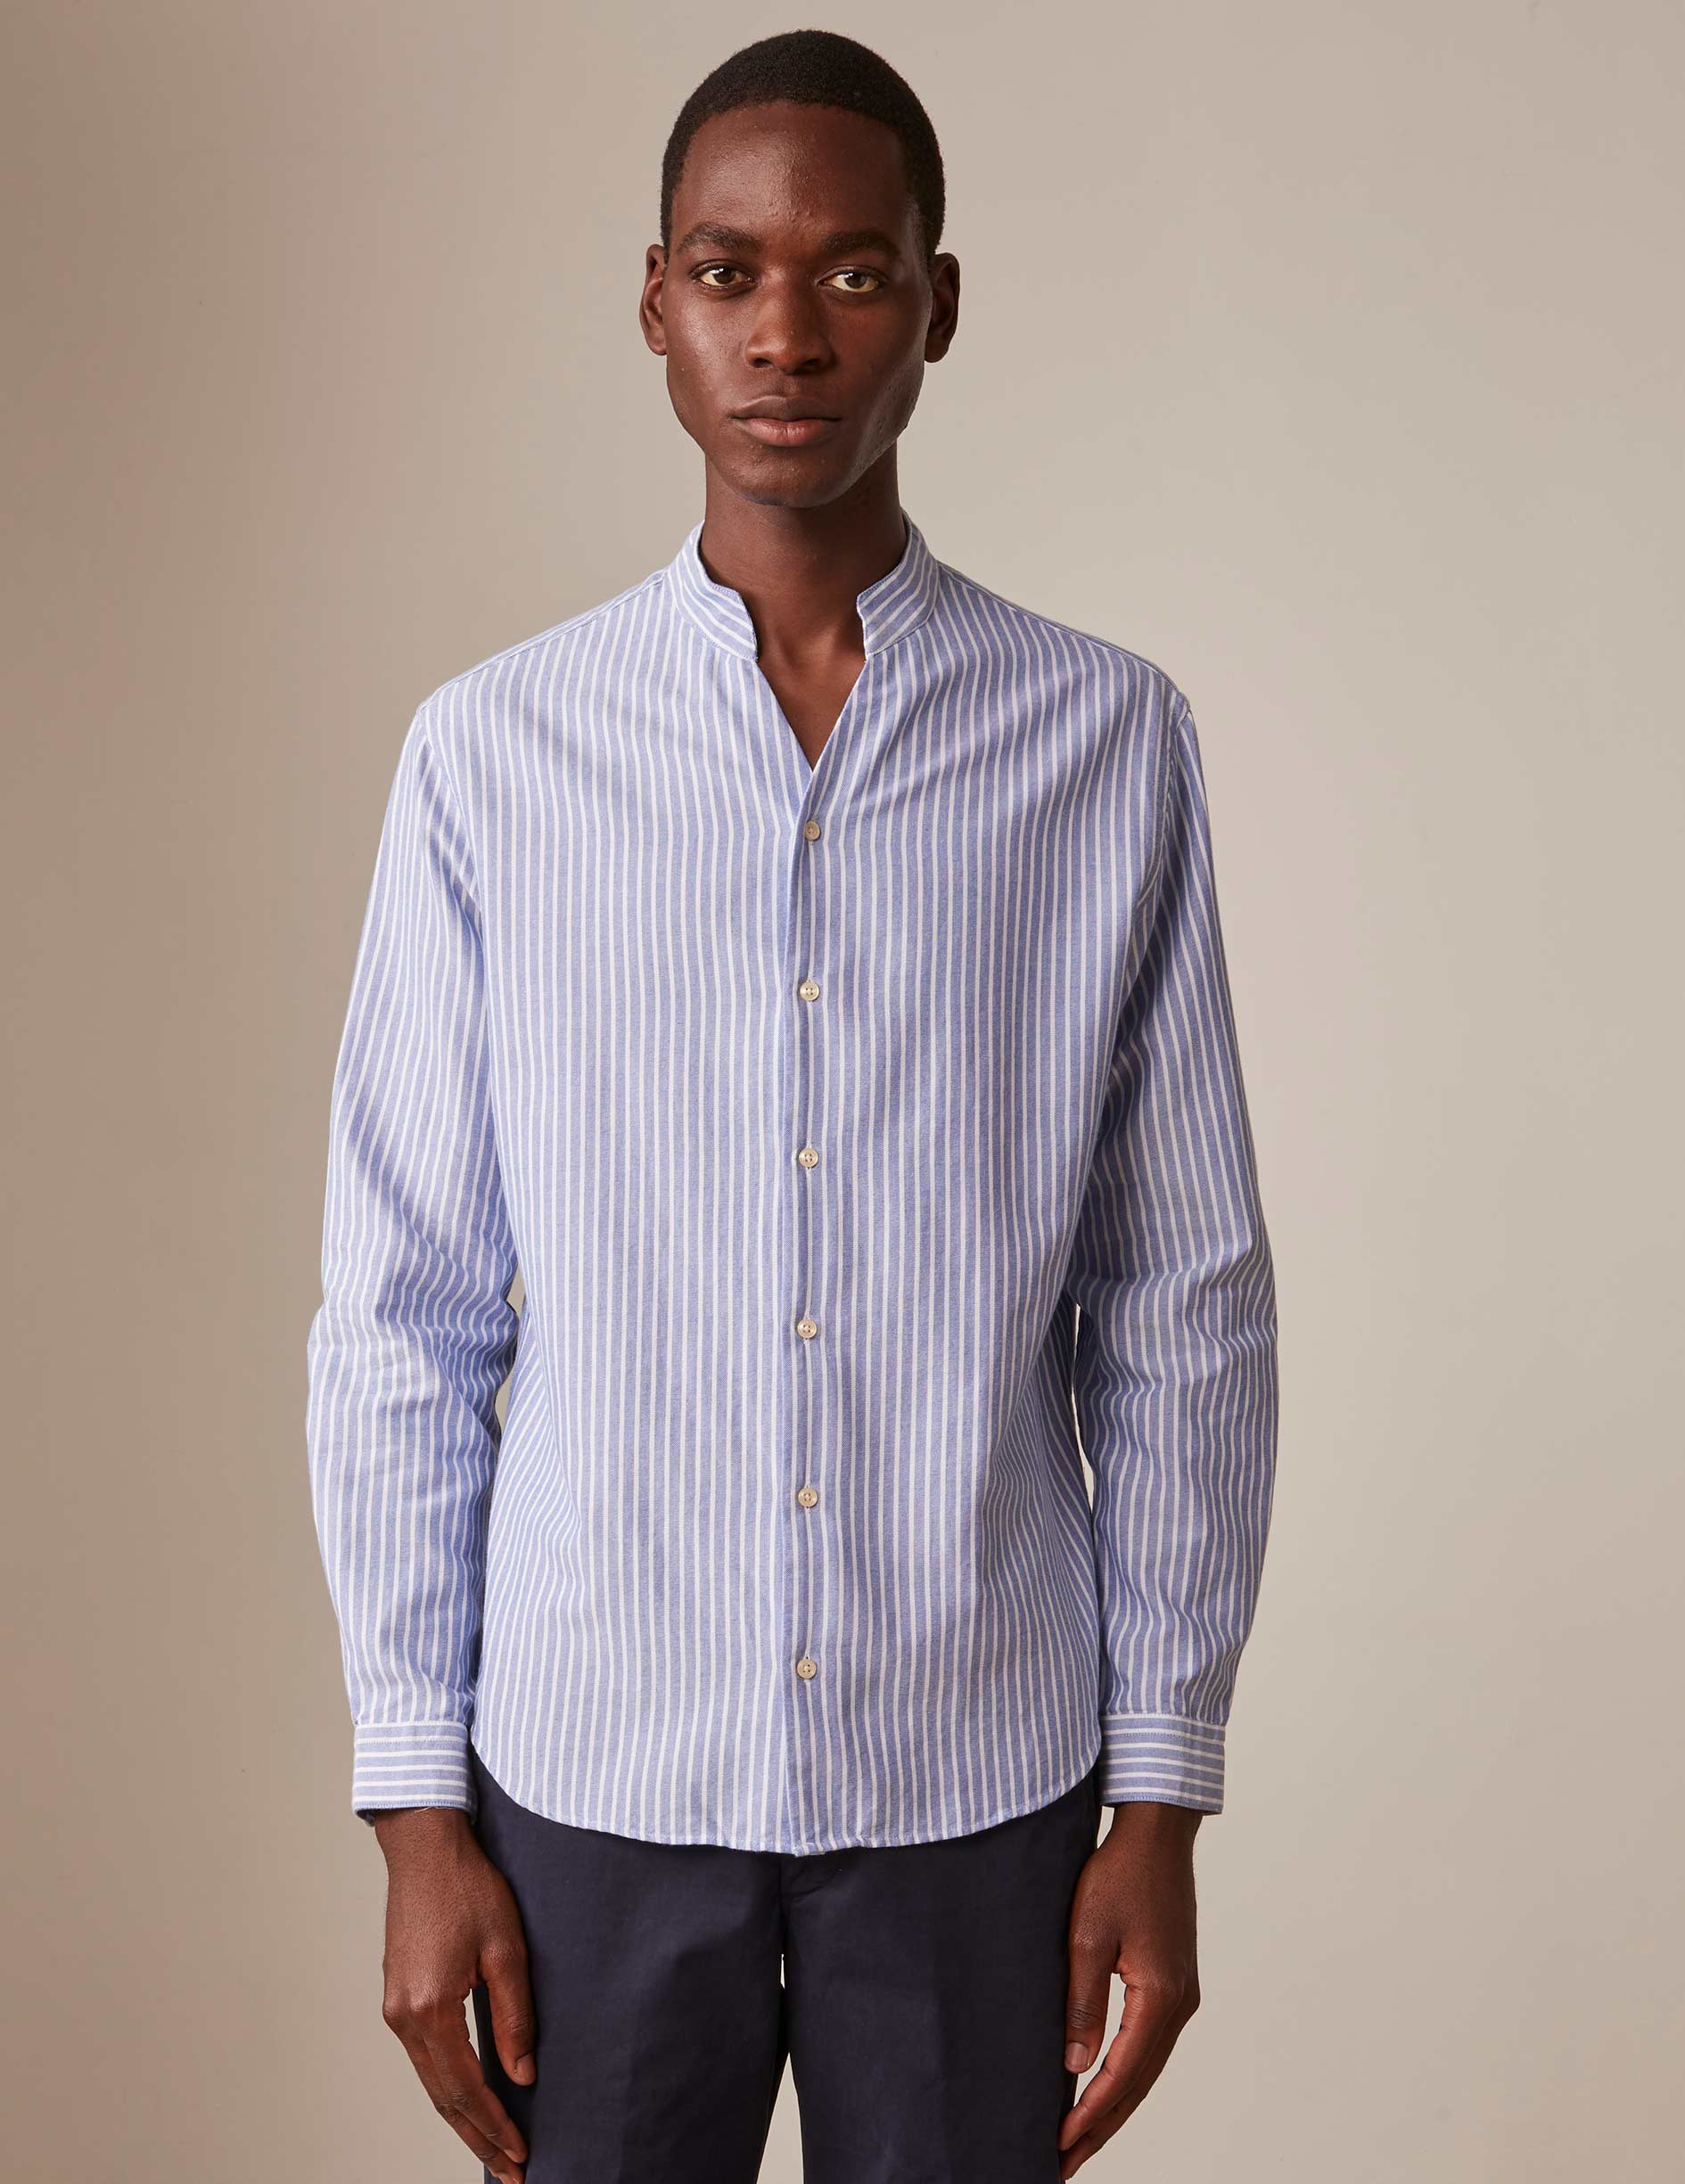 Blue striped Carl shirt - Oxford - Open straight Collar